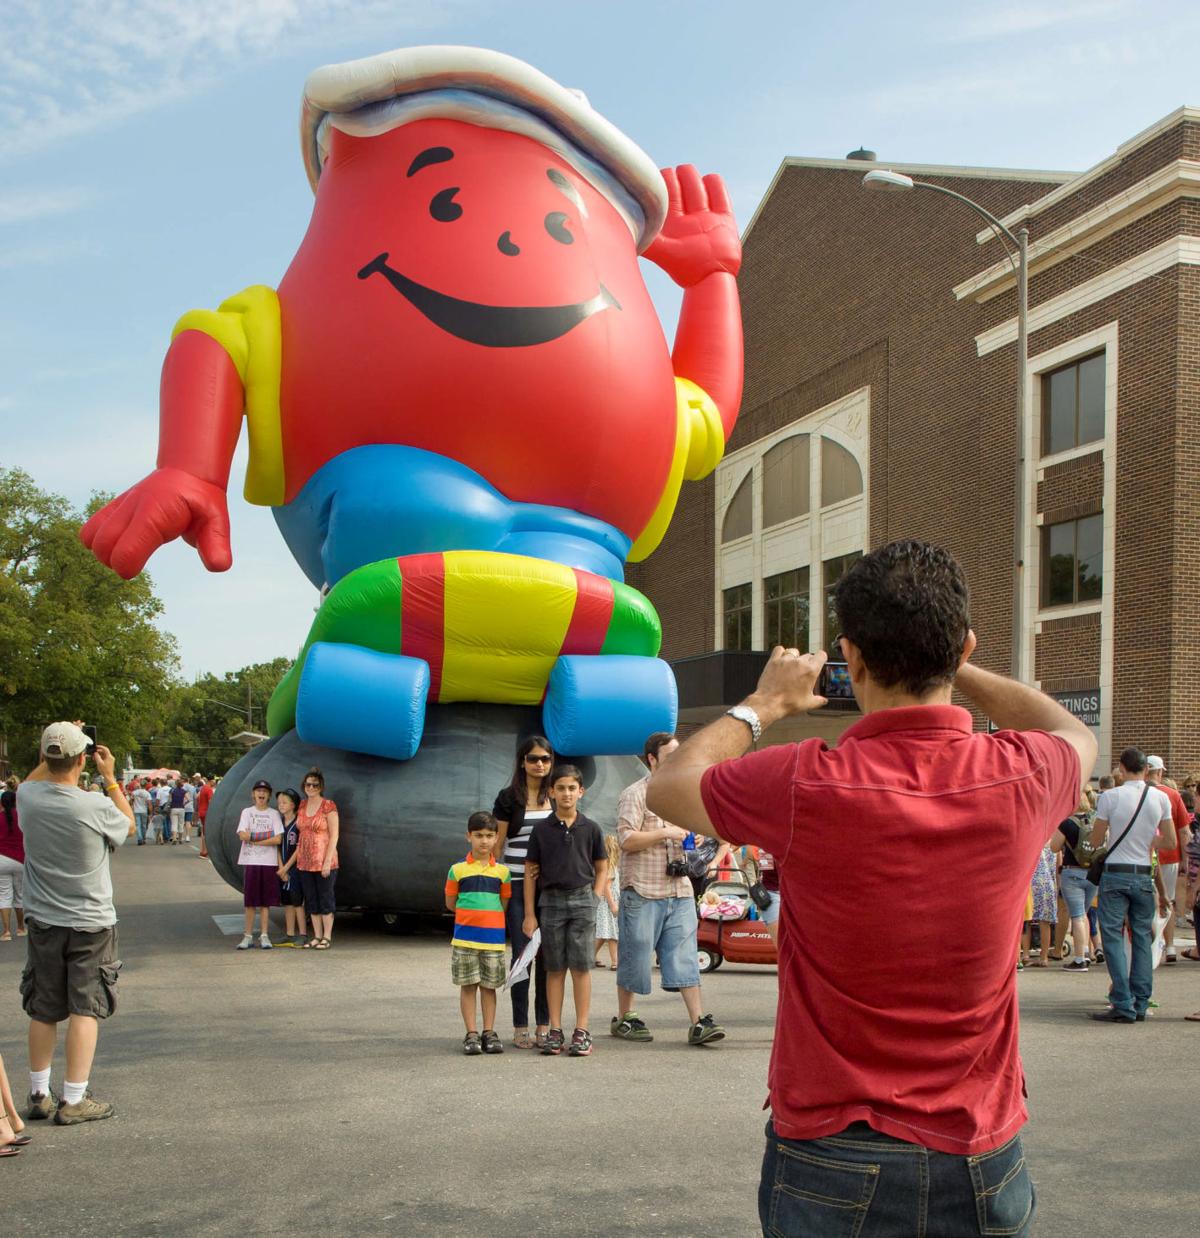 KoolAid Days, Nebraska Balloon & Wine Festival and 40+ other fun